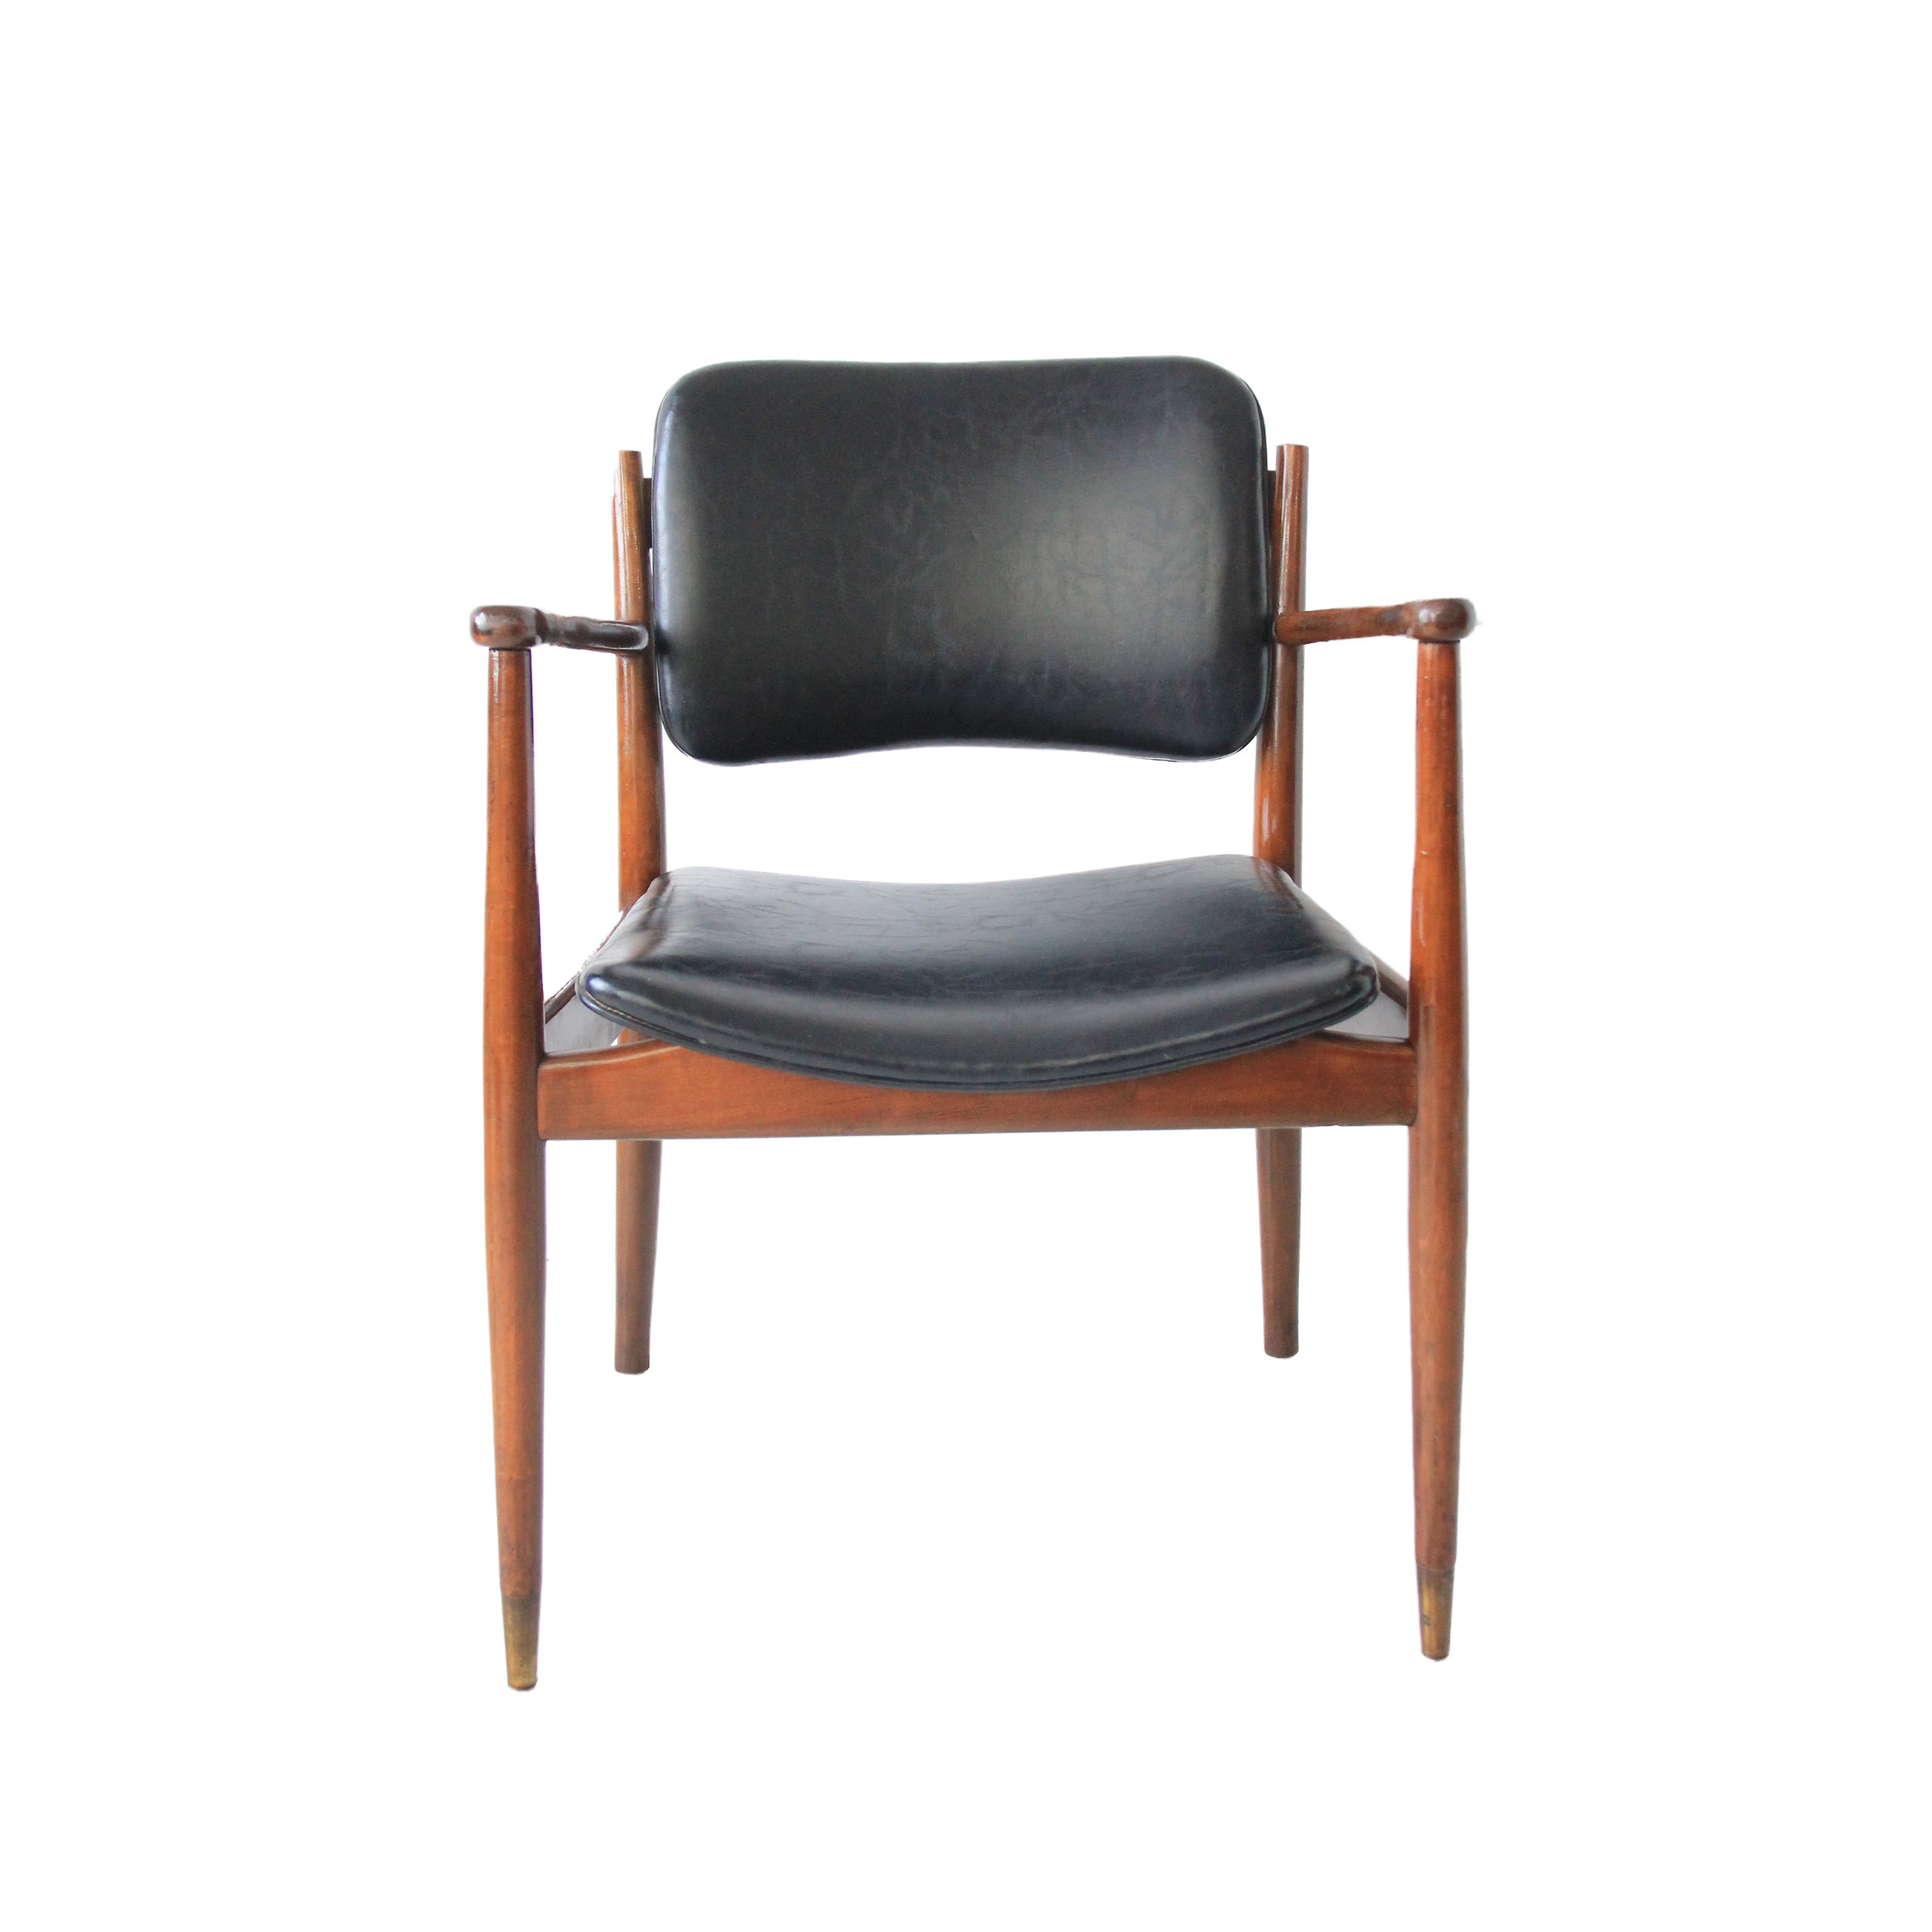 Vintage Mid Century Modern Black Leather Chair